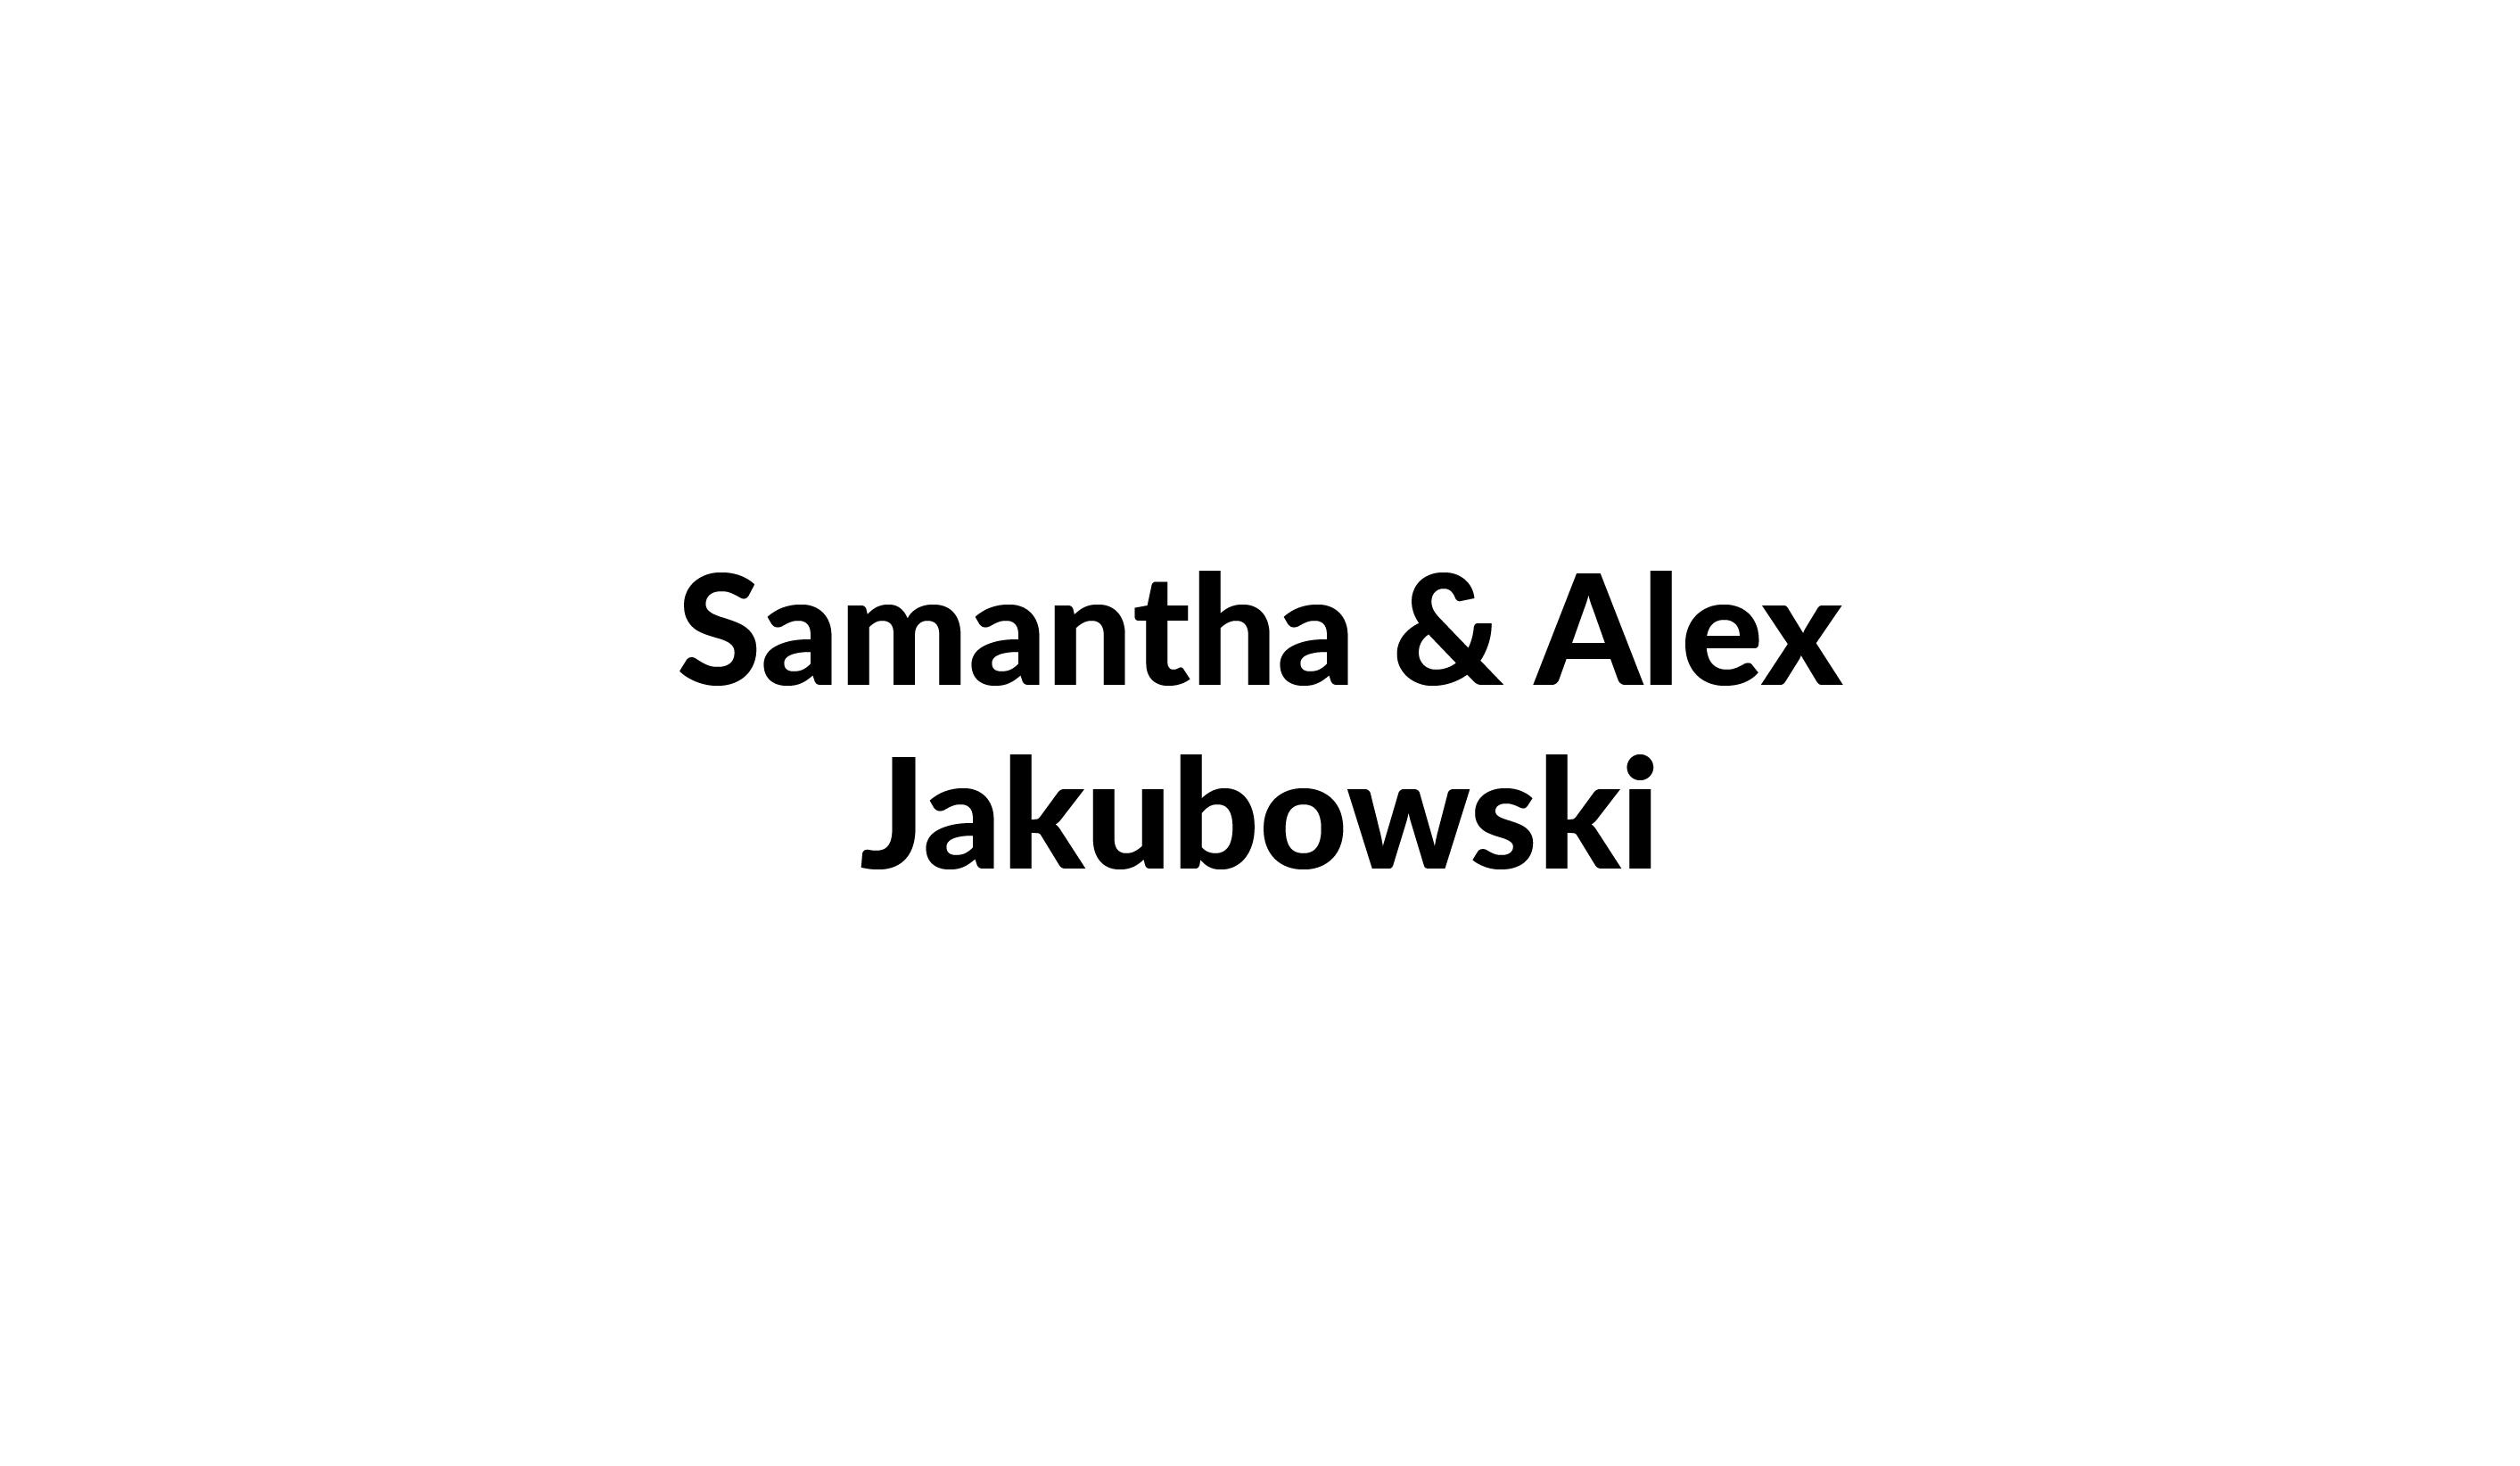 Samantha and Alex Jakubowski